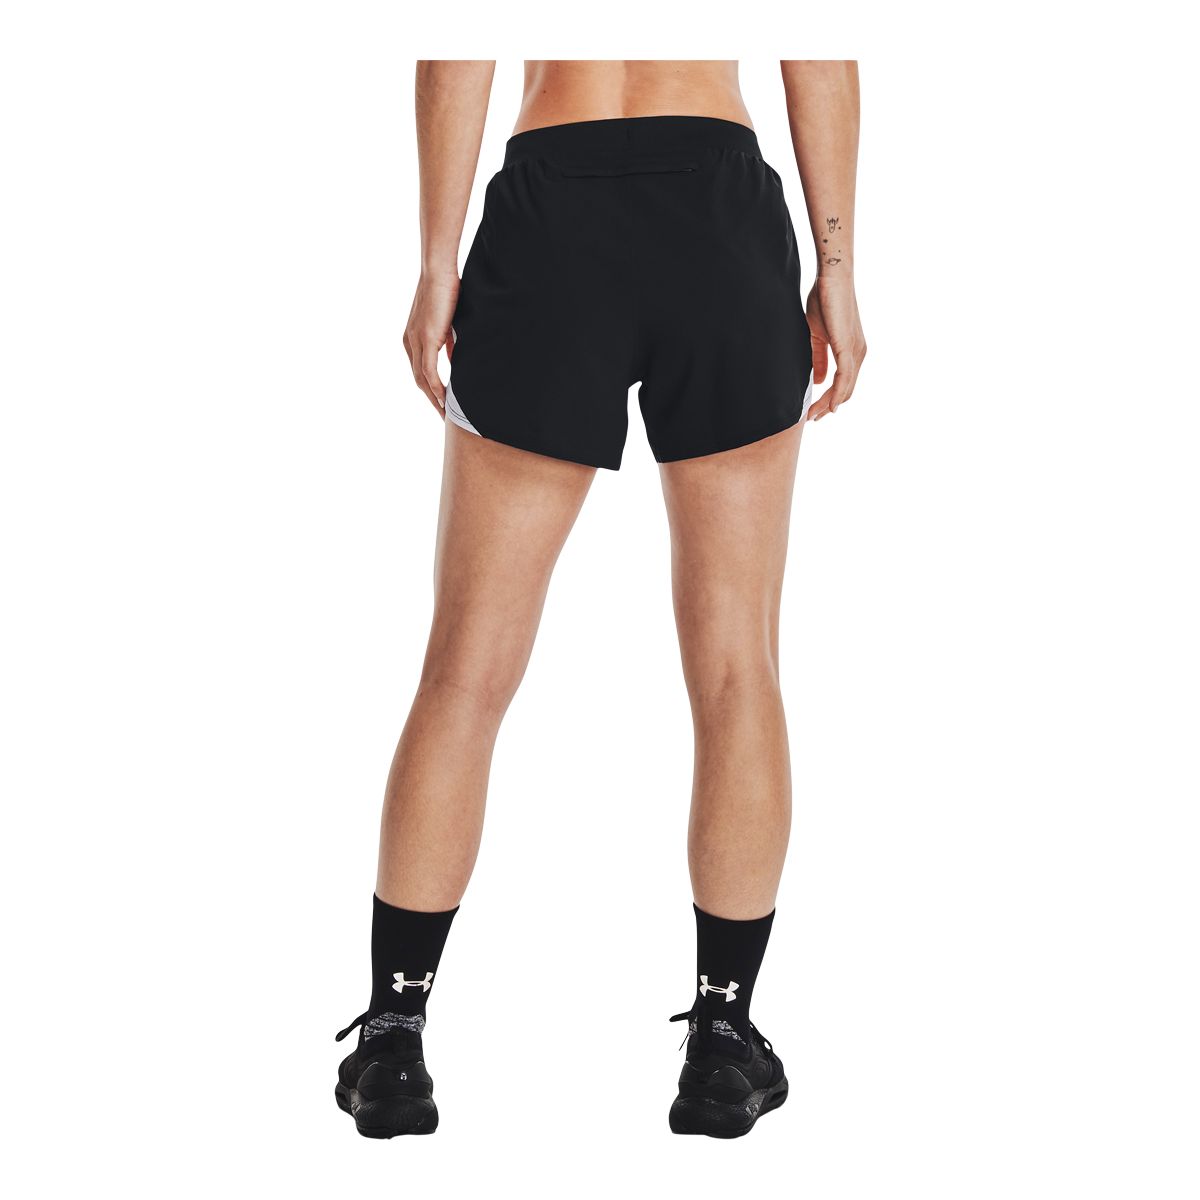 Under Armour Women's Flex Woven 3 Inch Shorts